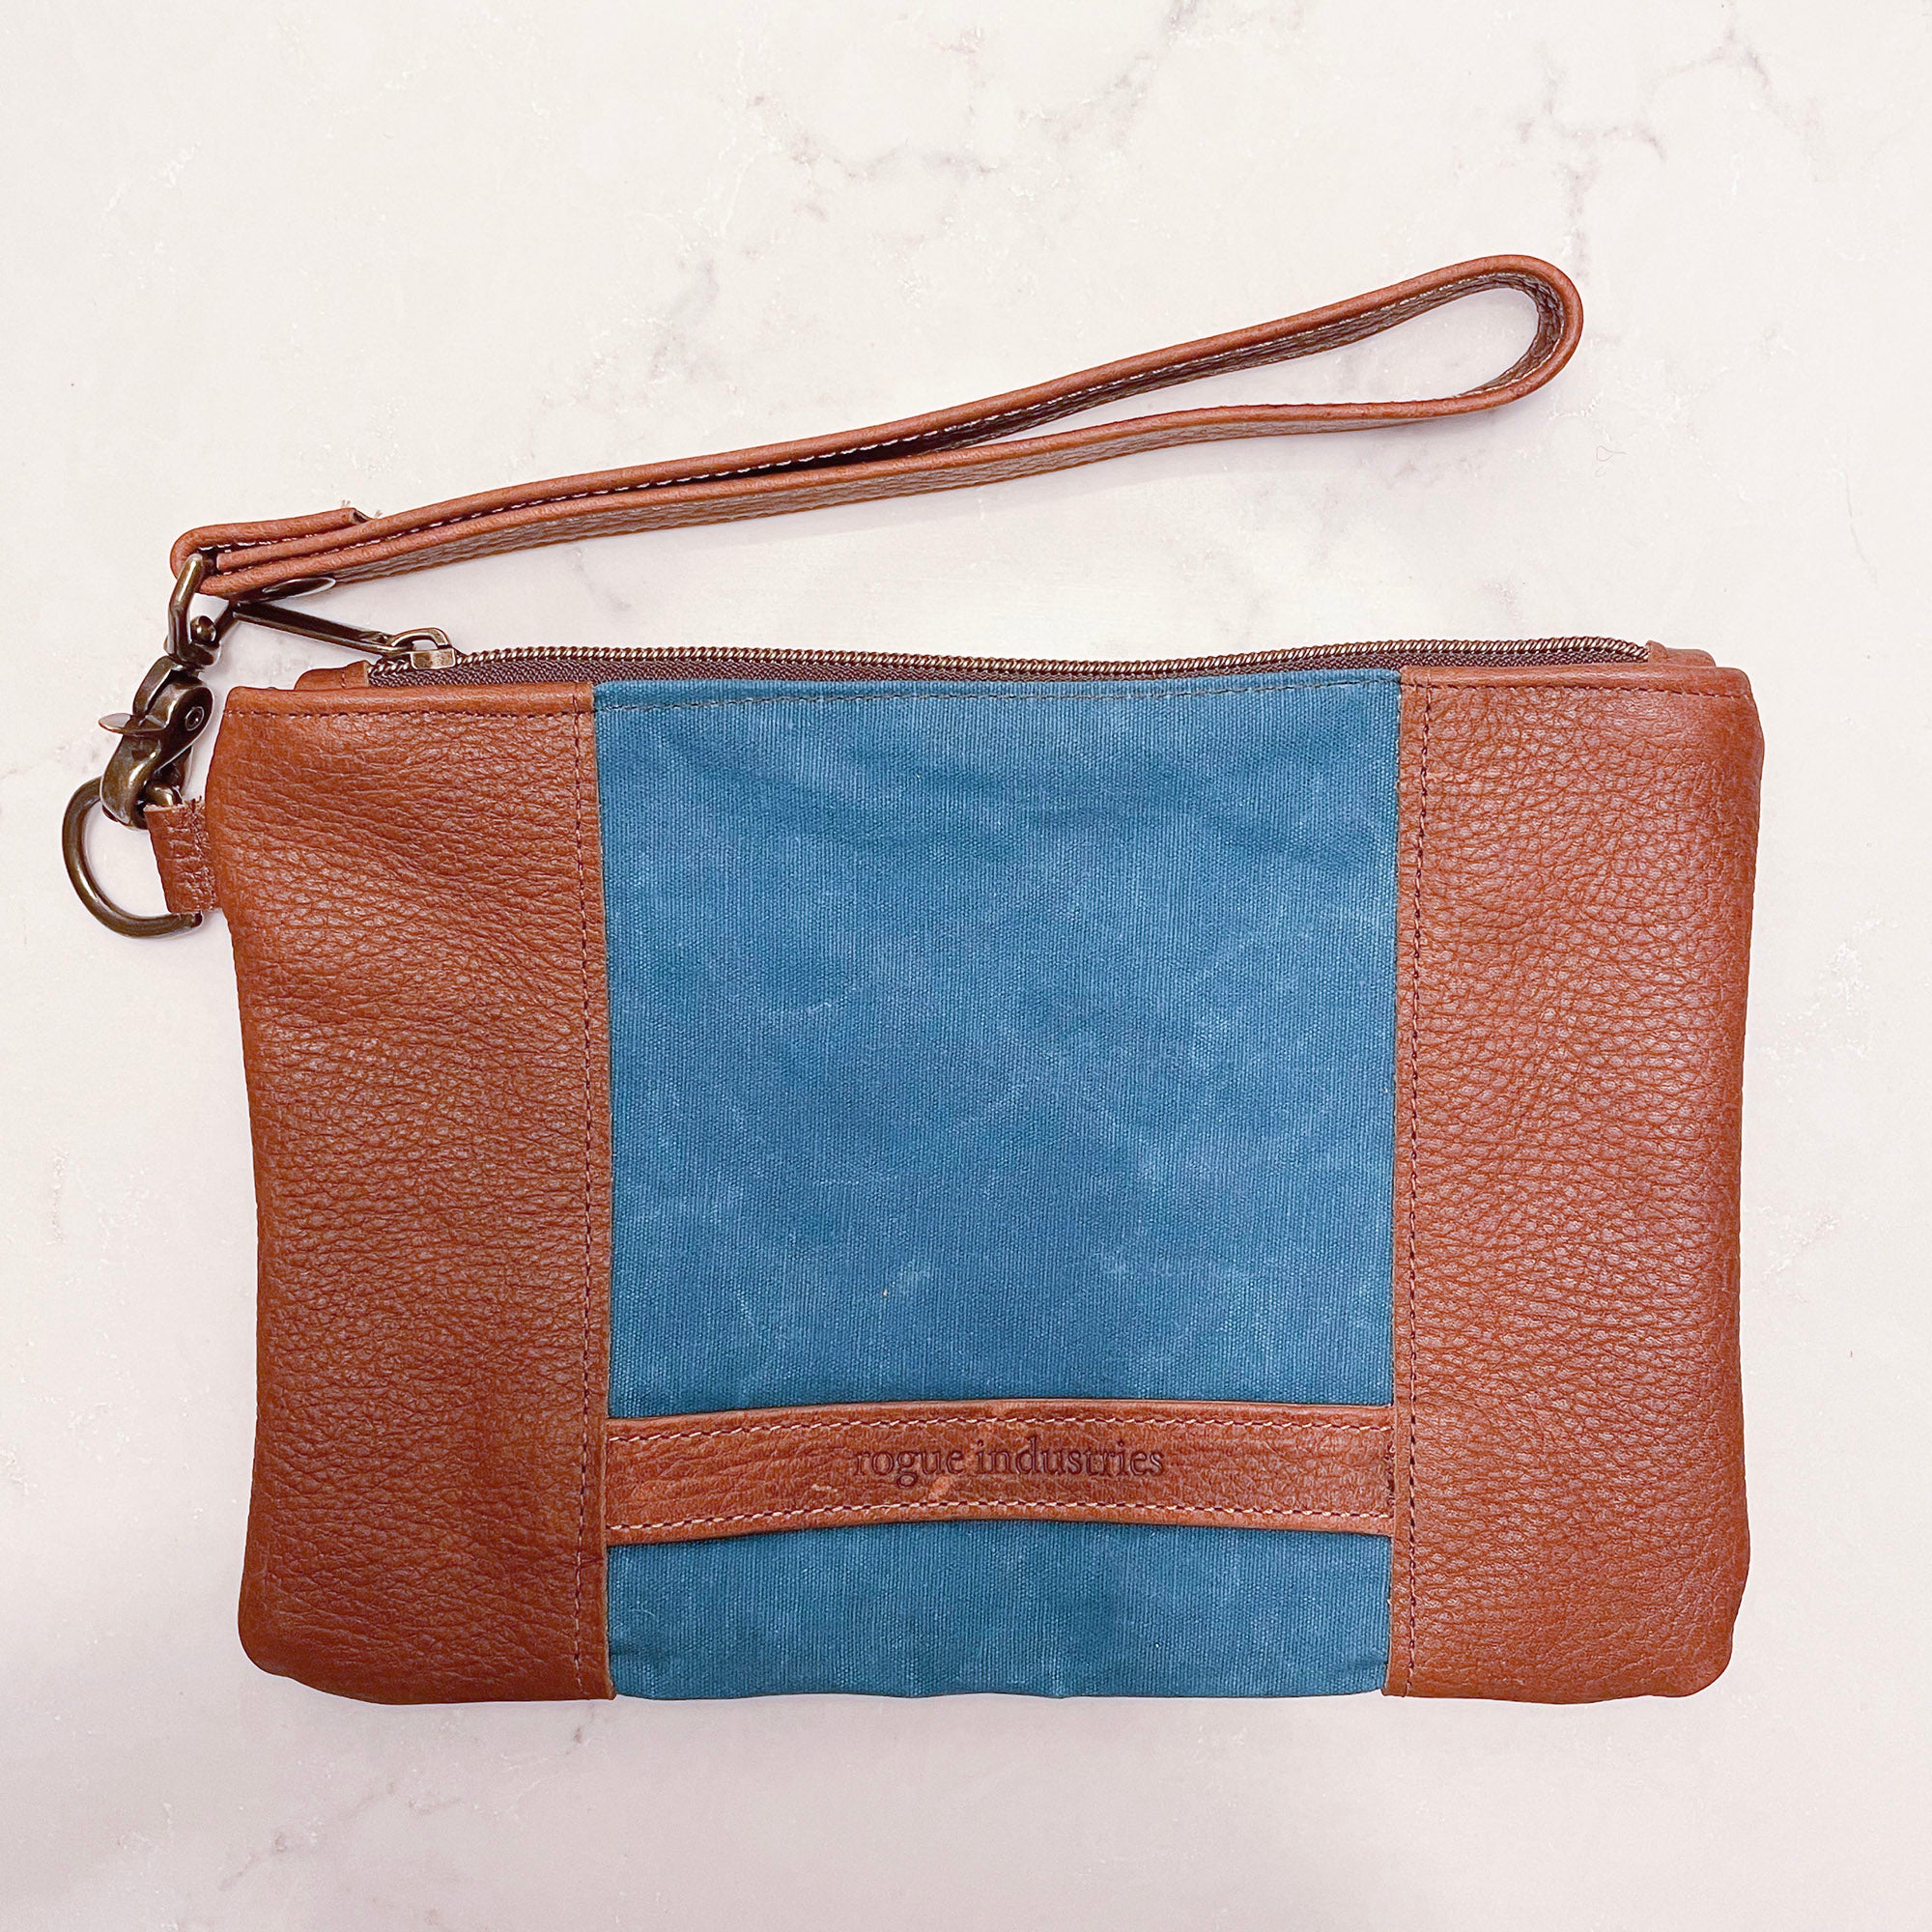 Teal Western Purse/Handbag with Small Clutch #DN104